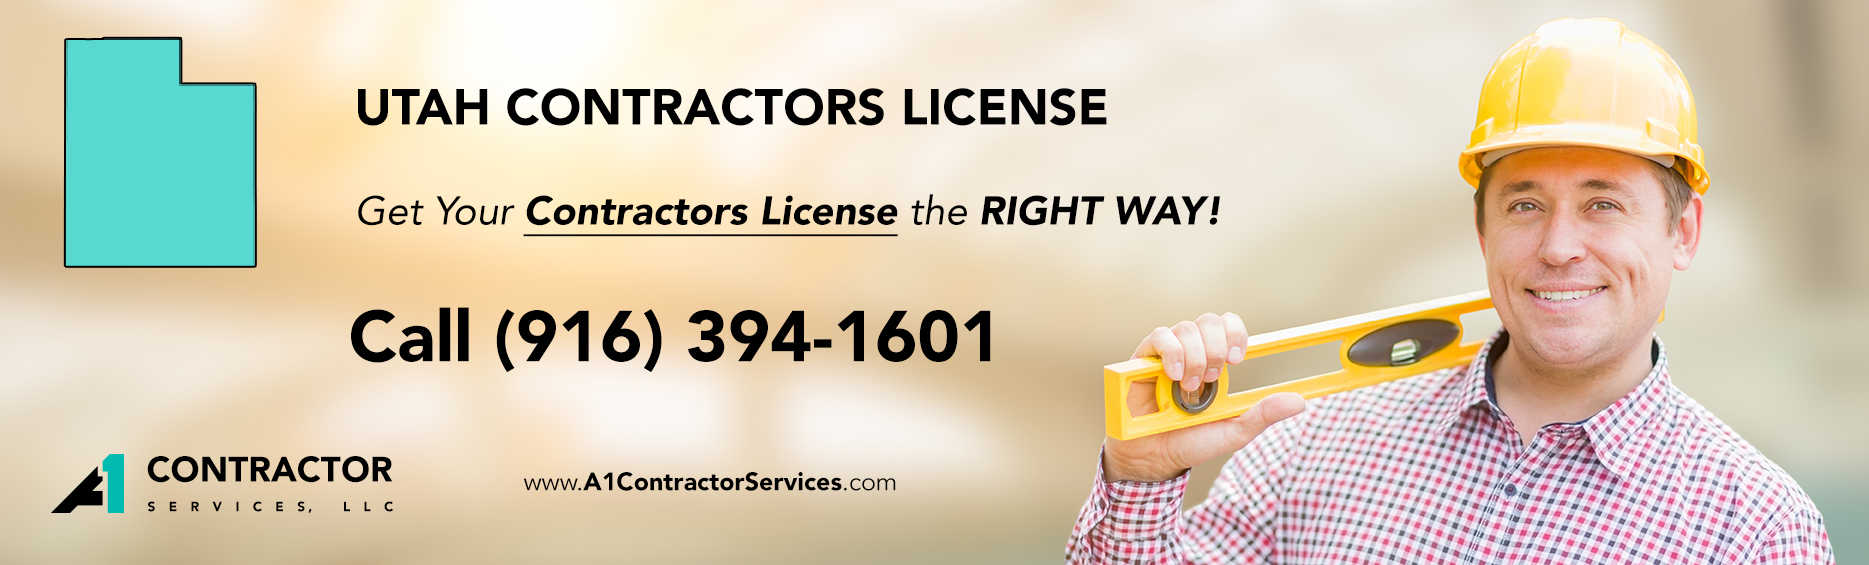 Utah Contractors License